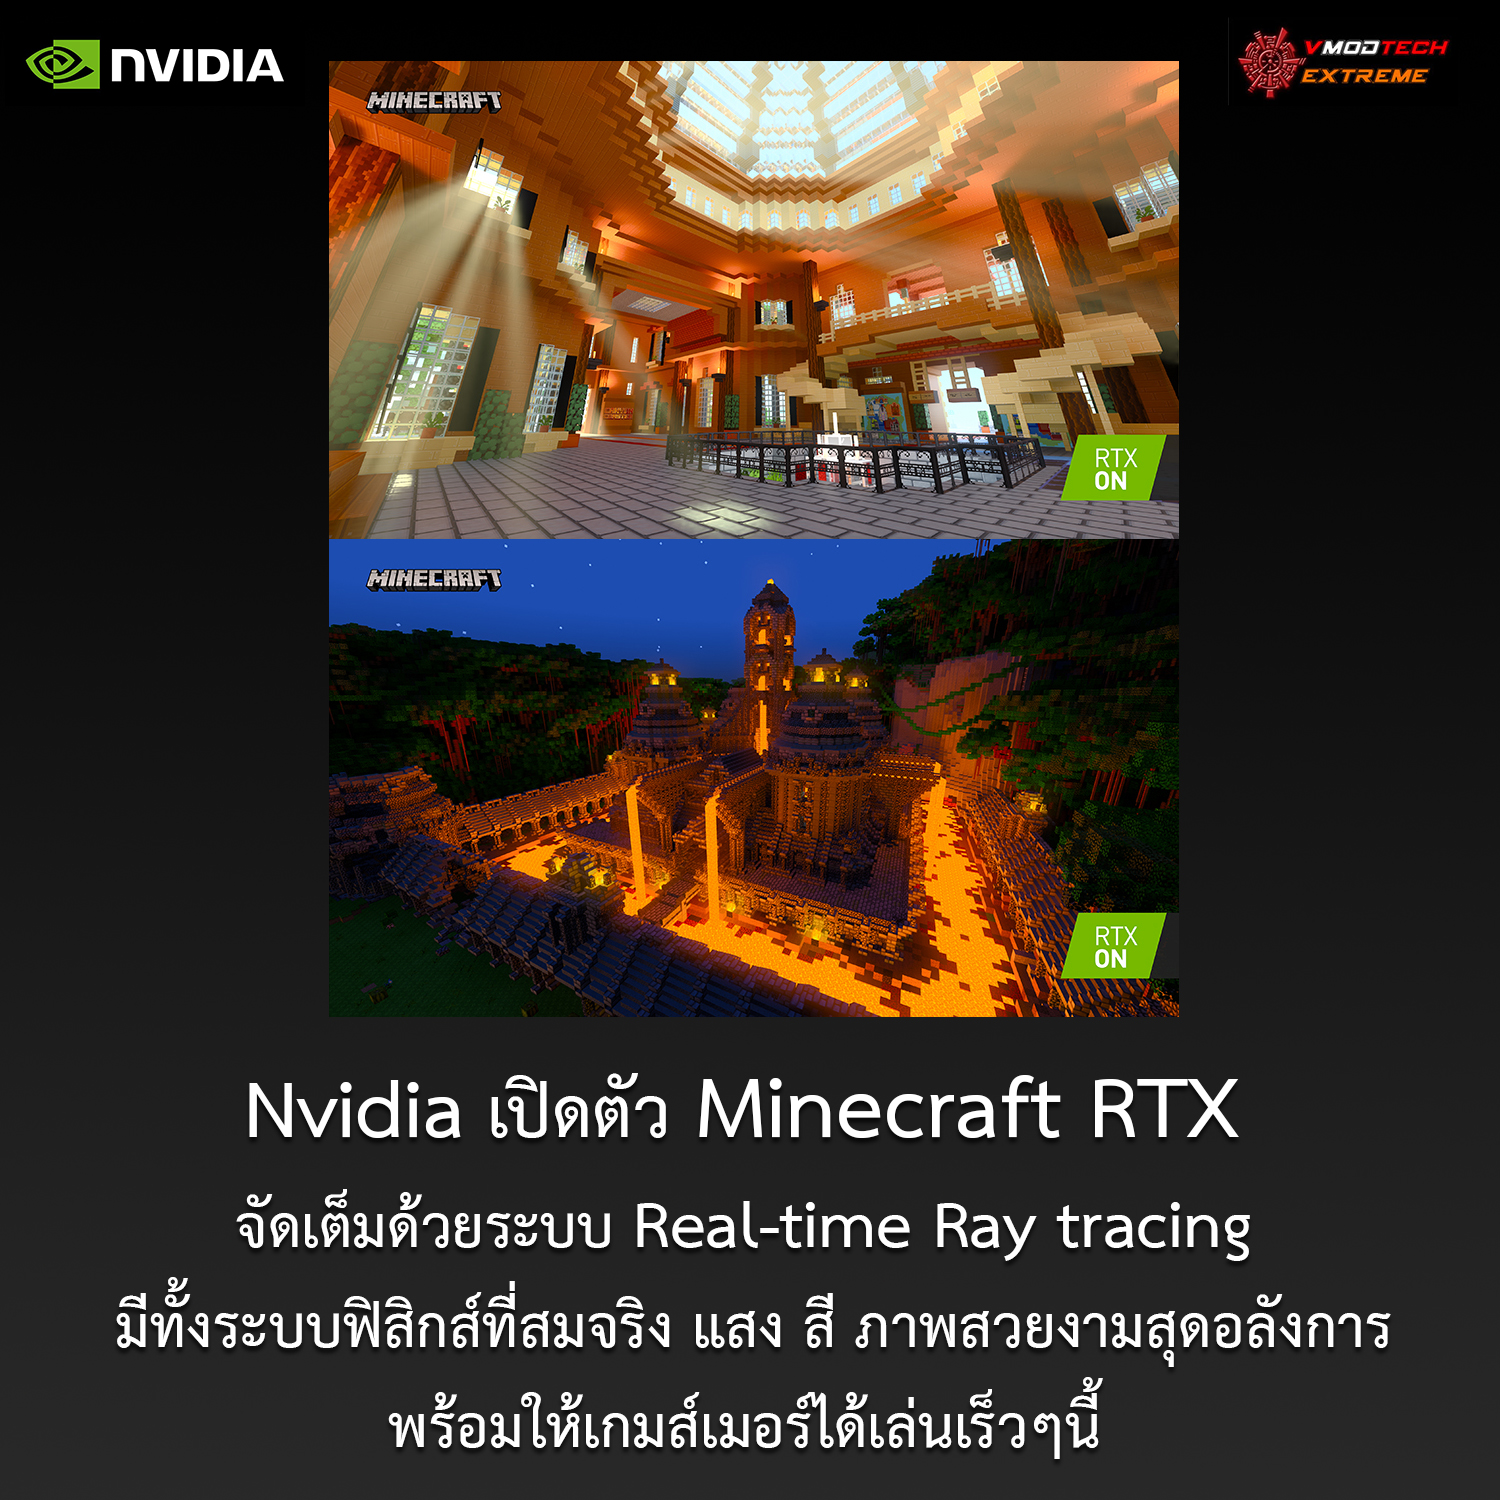 nvidia minecraft rtx Nvidia เปิดตัว Minecraft RTX จัดเต็มด้วยระบบ Real time Ray tracing มีทั้งระบบฟิสิกส์ที่สมจริง แสง สี ภาพสวยงามสุดอลังการพร้อมให้เกมส์เมอร์ได้เล่นเร็วๆนี้ 